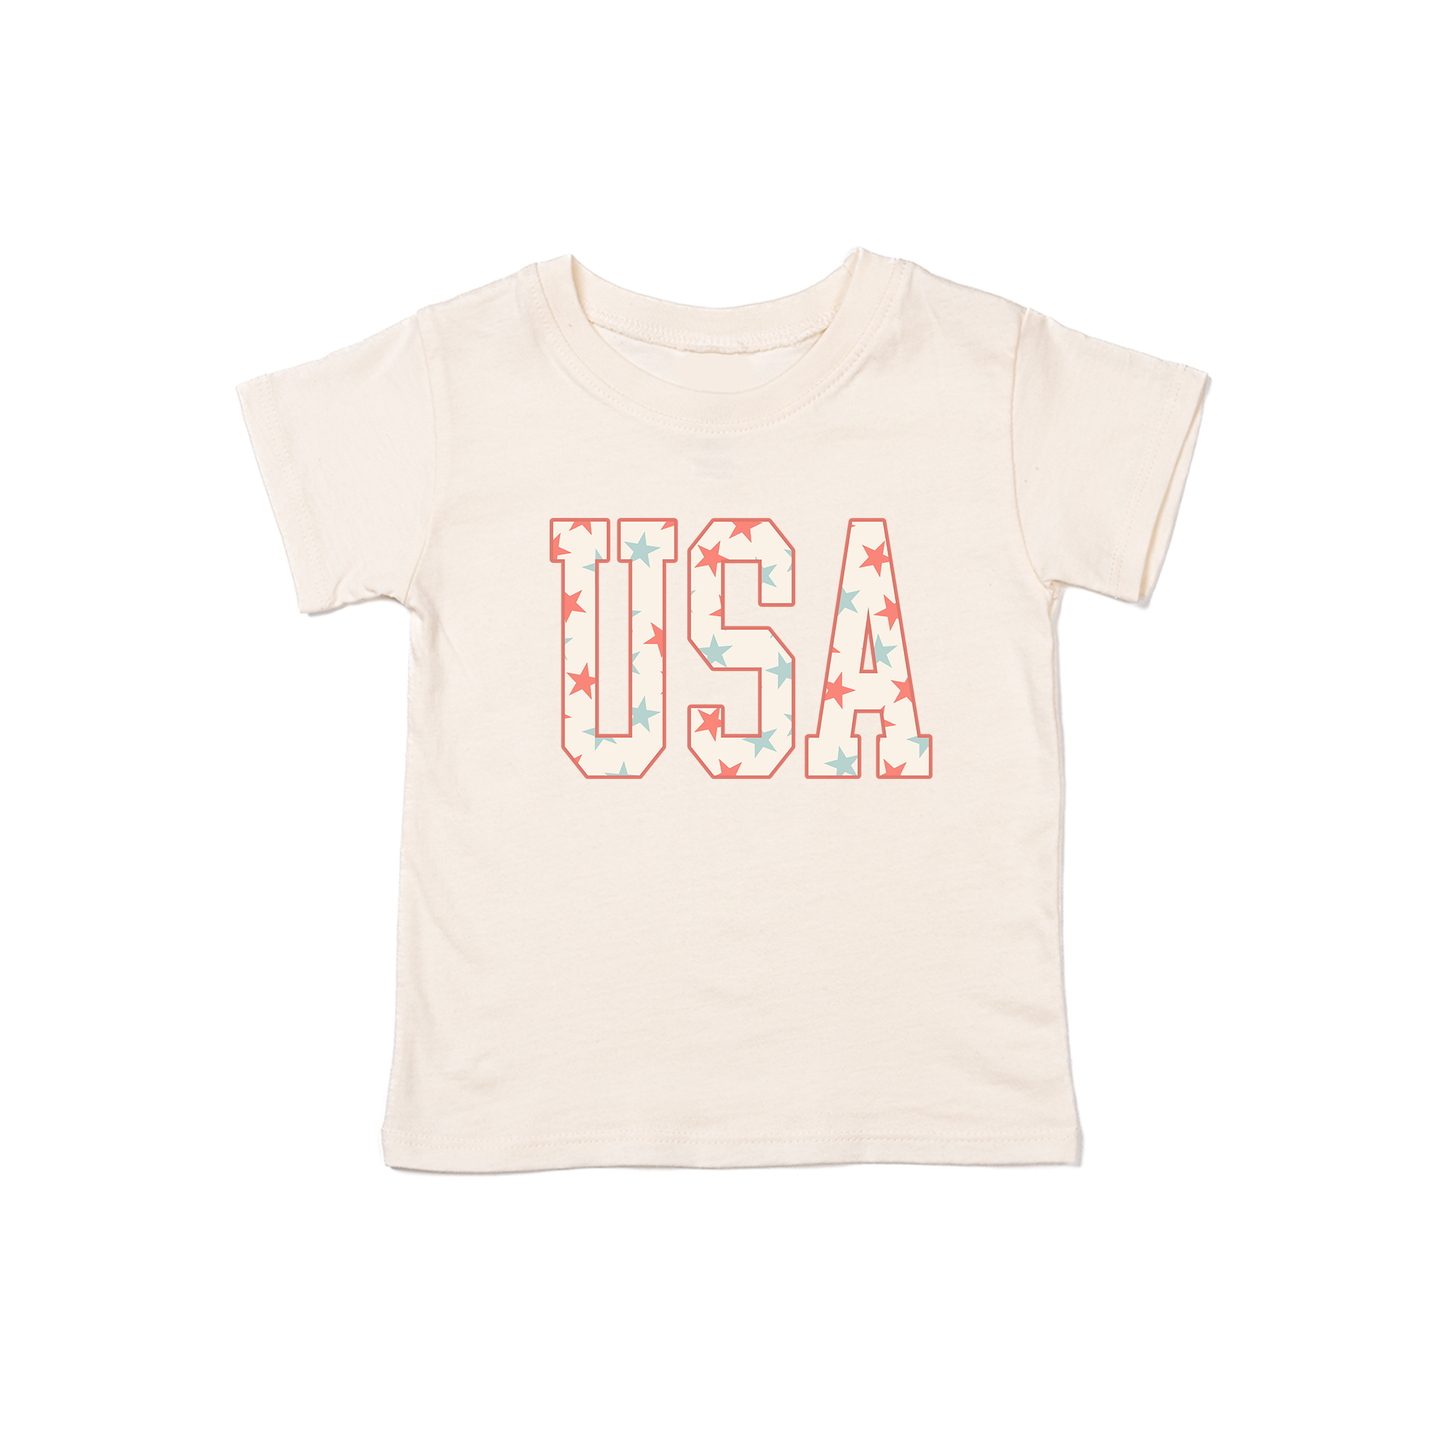 USA Varsity (Stars) - Kids Tee (Natural)